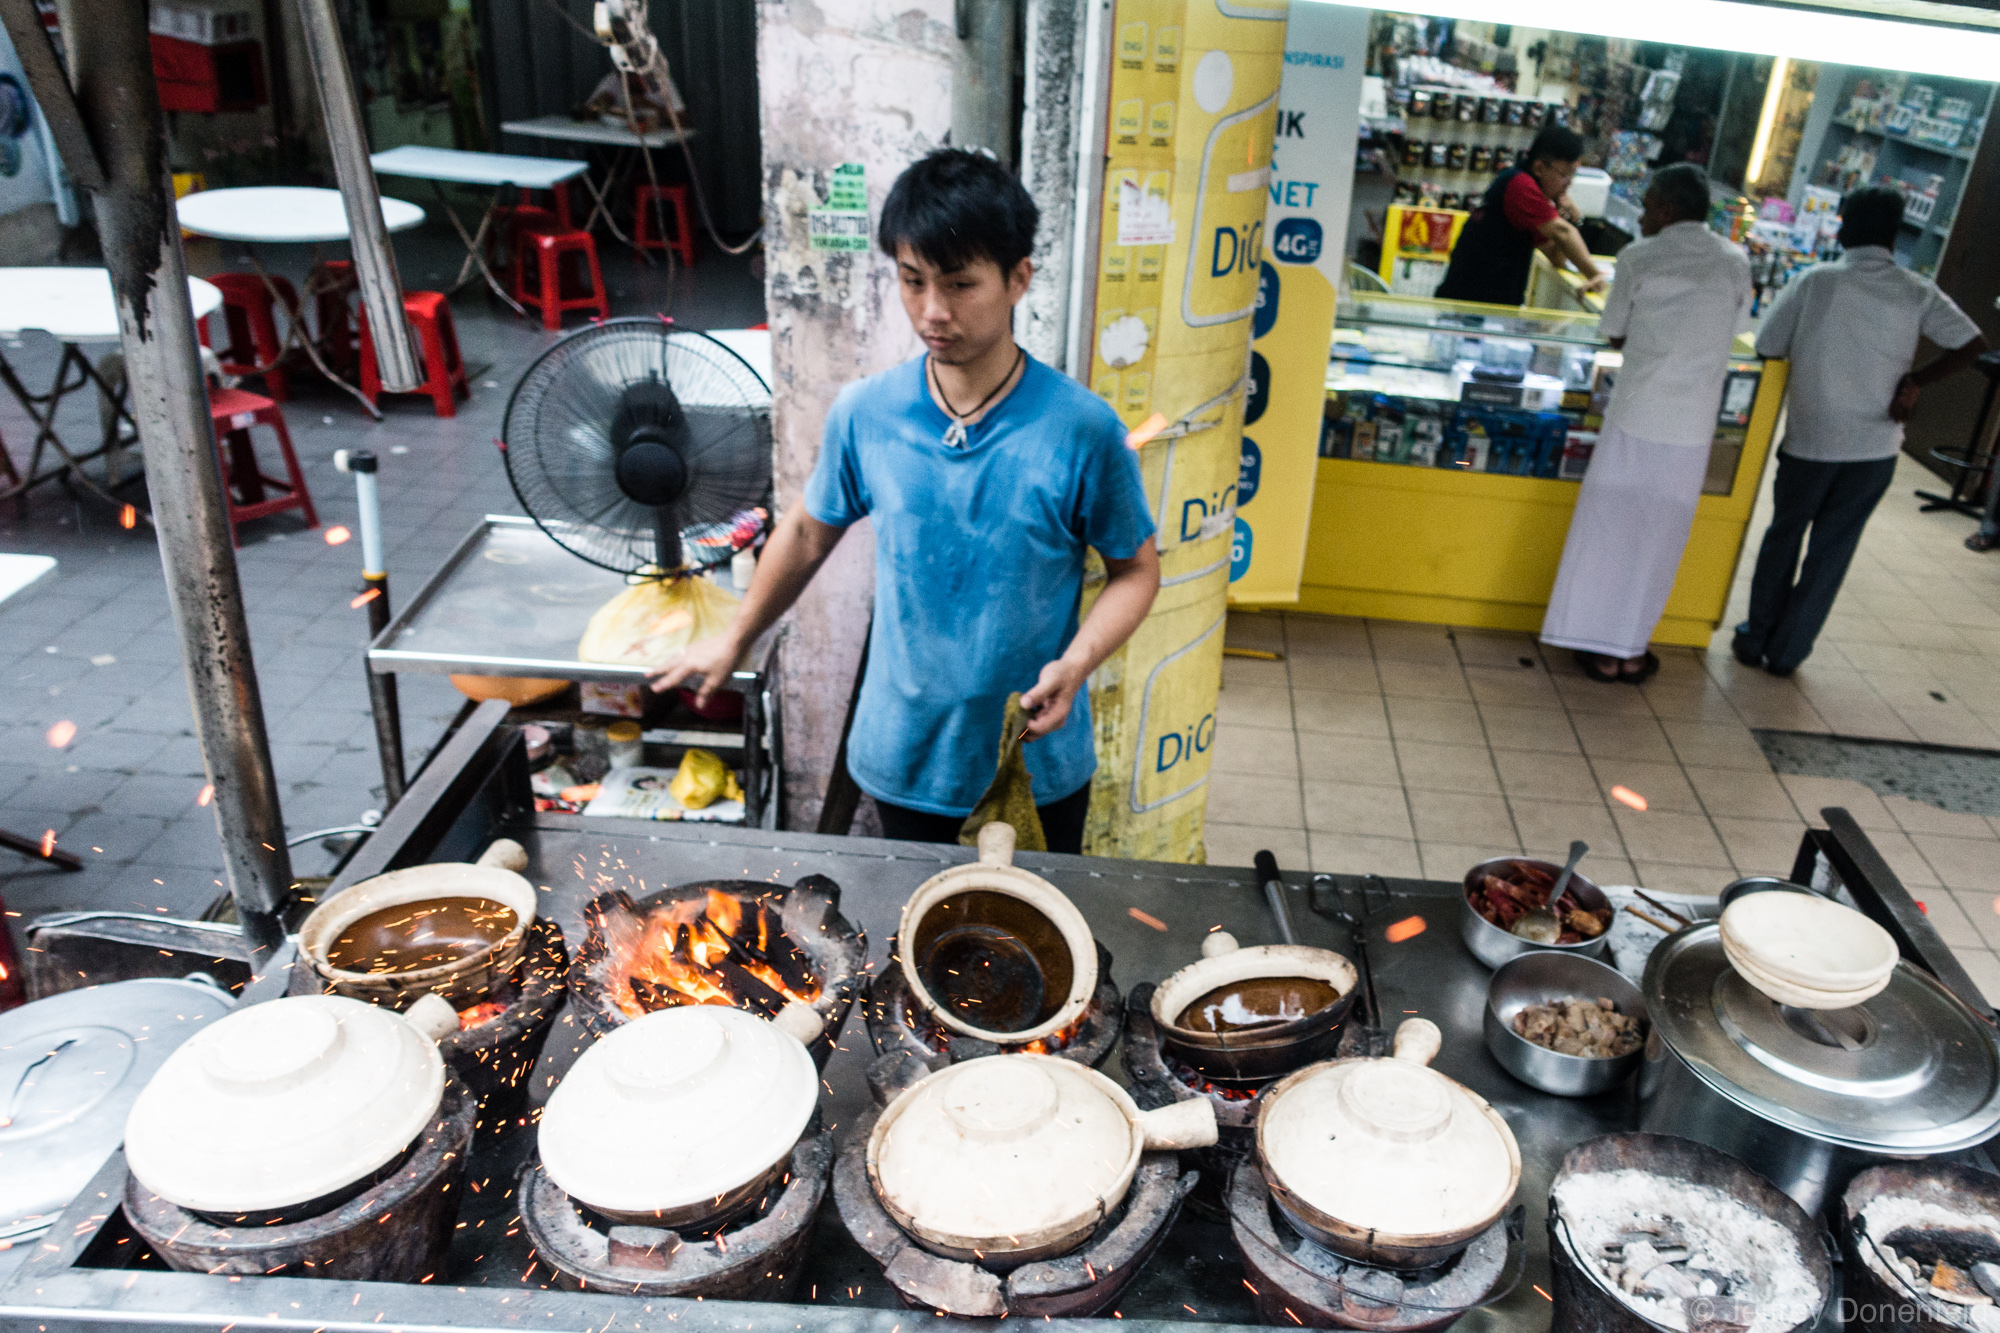 Lunch in Kuala Lumpur, Malaysia – Claypot Chicken and Rice